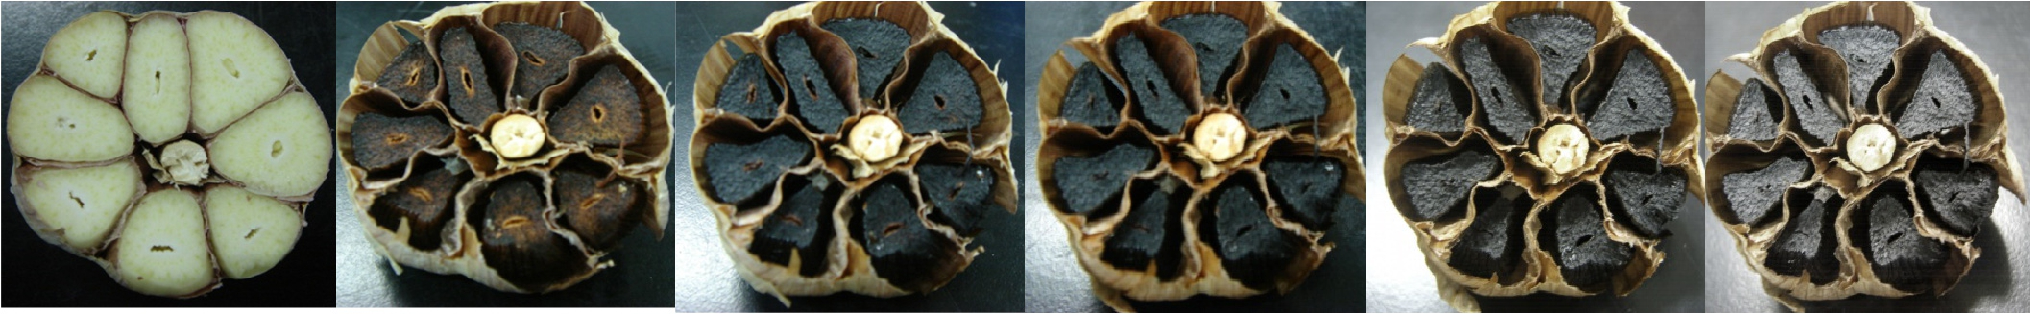 black garlic product